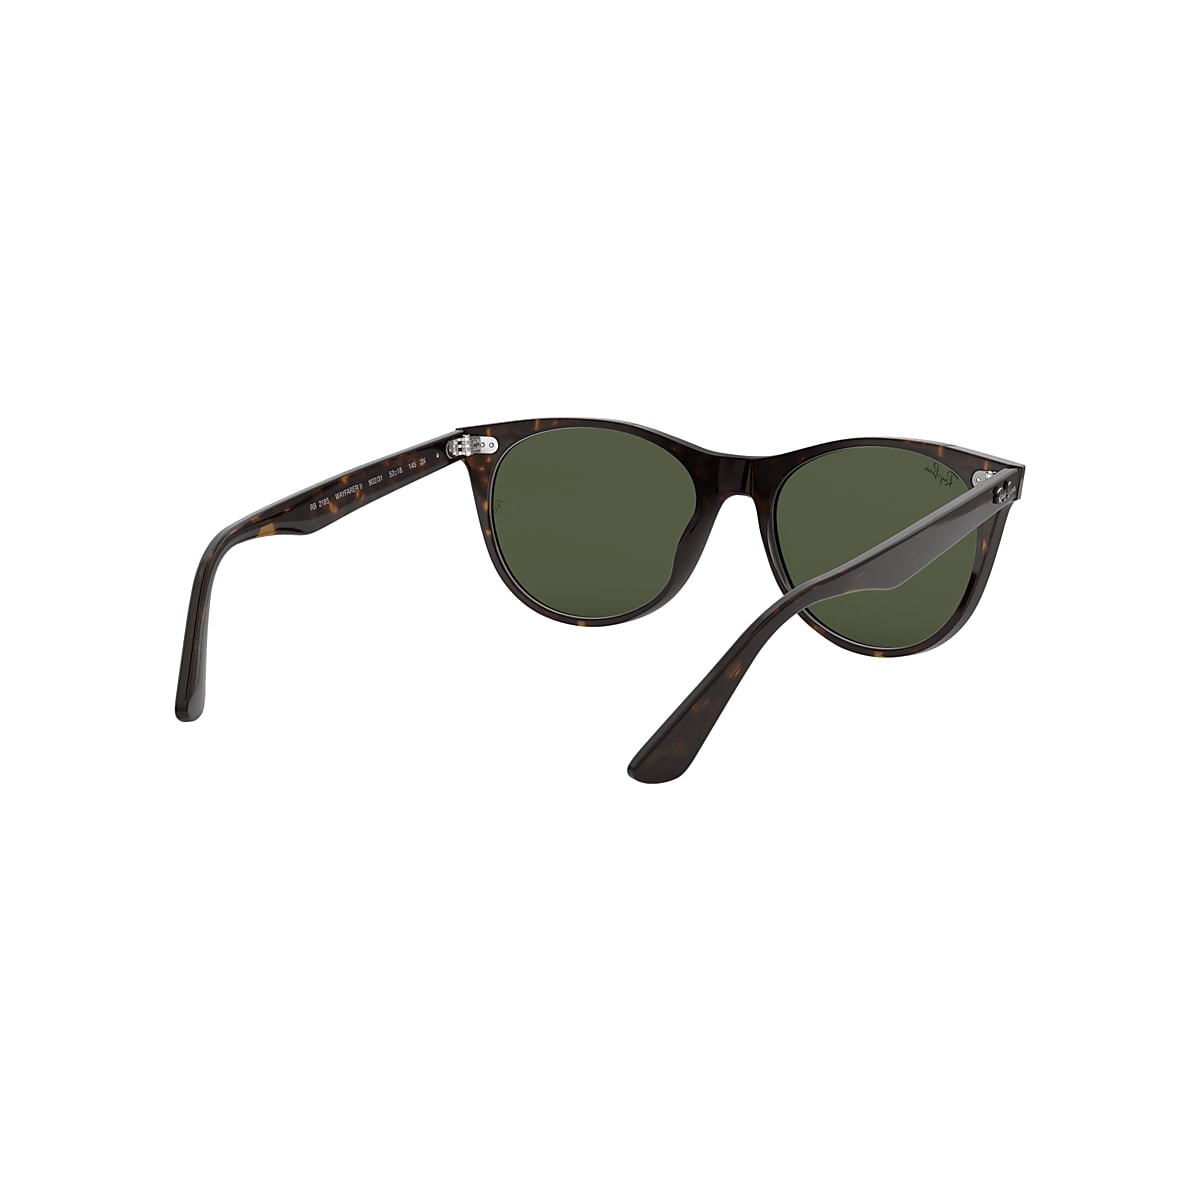 WAYFARER II CLASSIC Sunglasses in Tortoise and Green - RB2185 